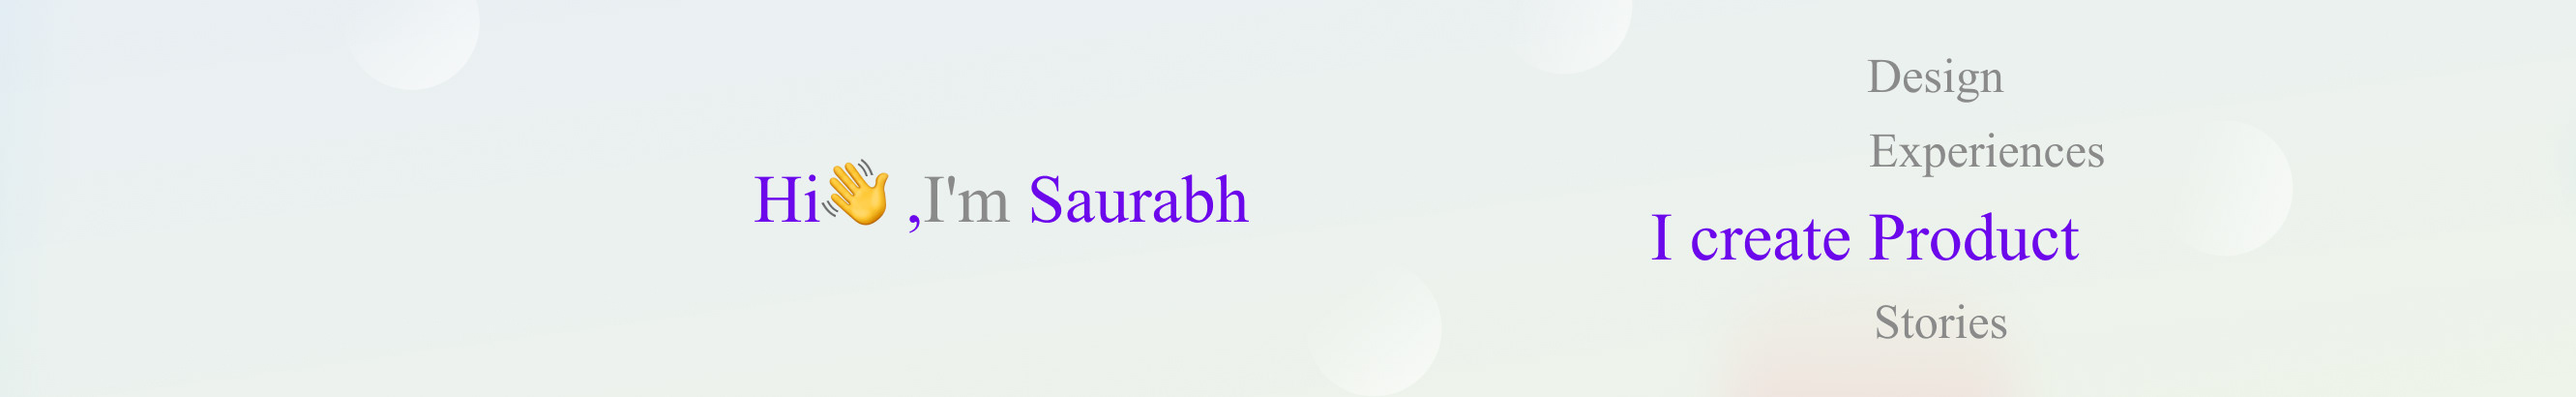 Banner de perfil de Saurabh singh